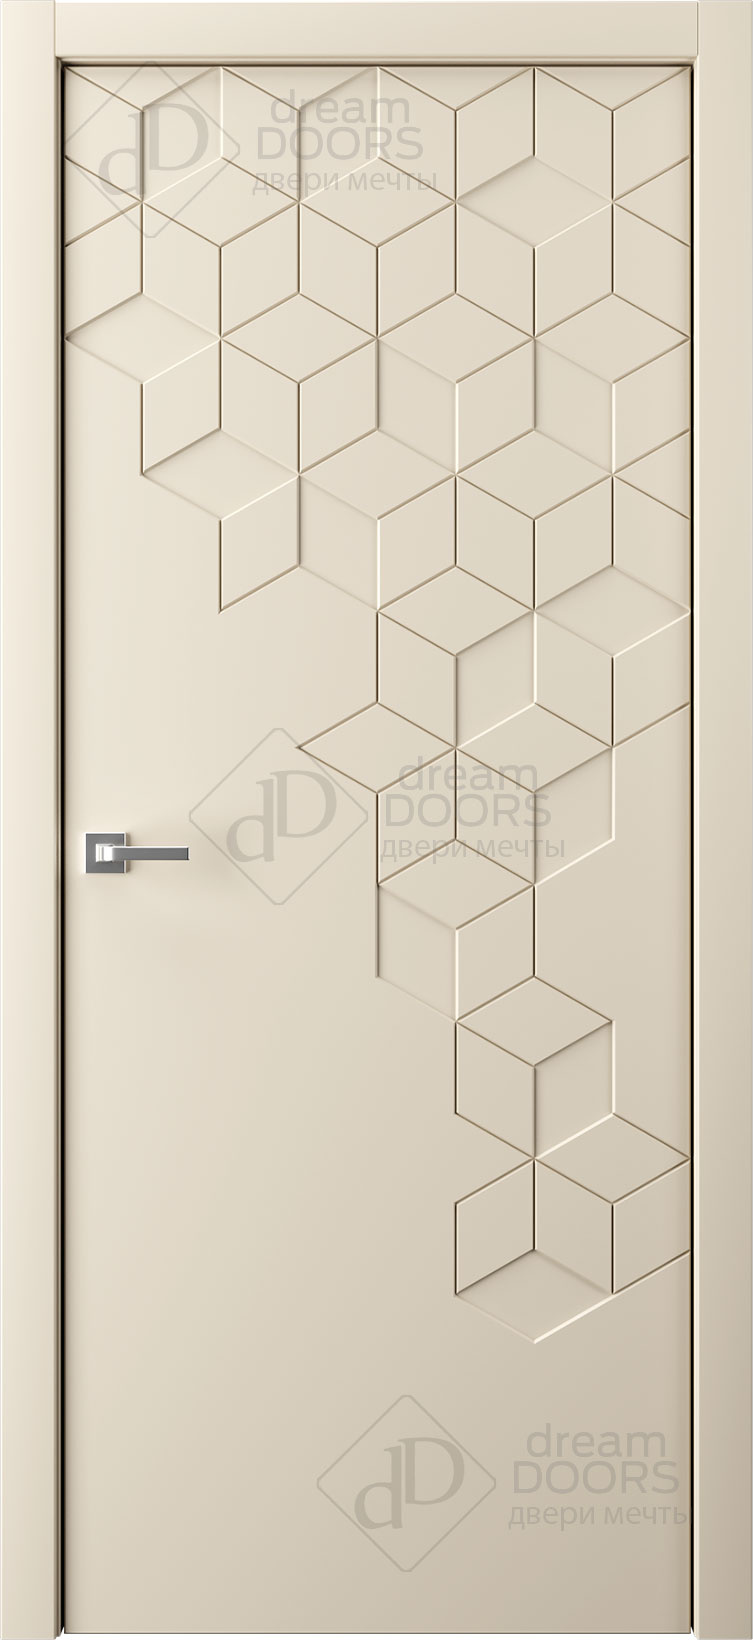 Dream Doors Межкомнатная дверь I23, арт. 6247 - фото №1